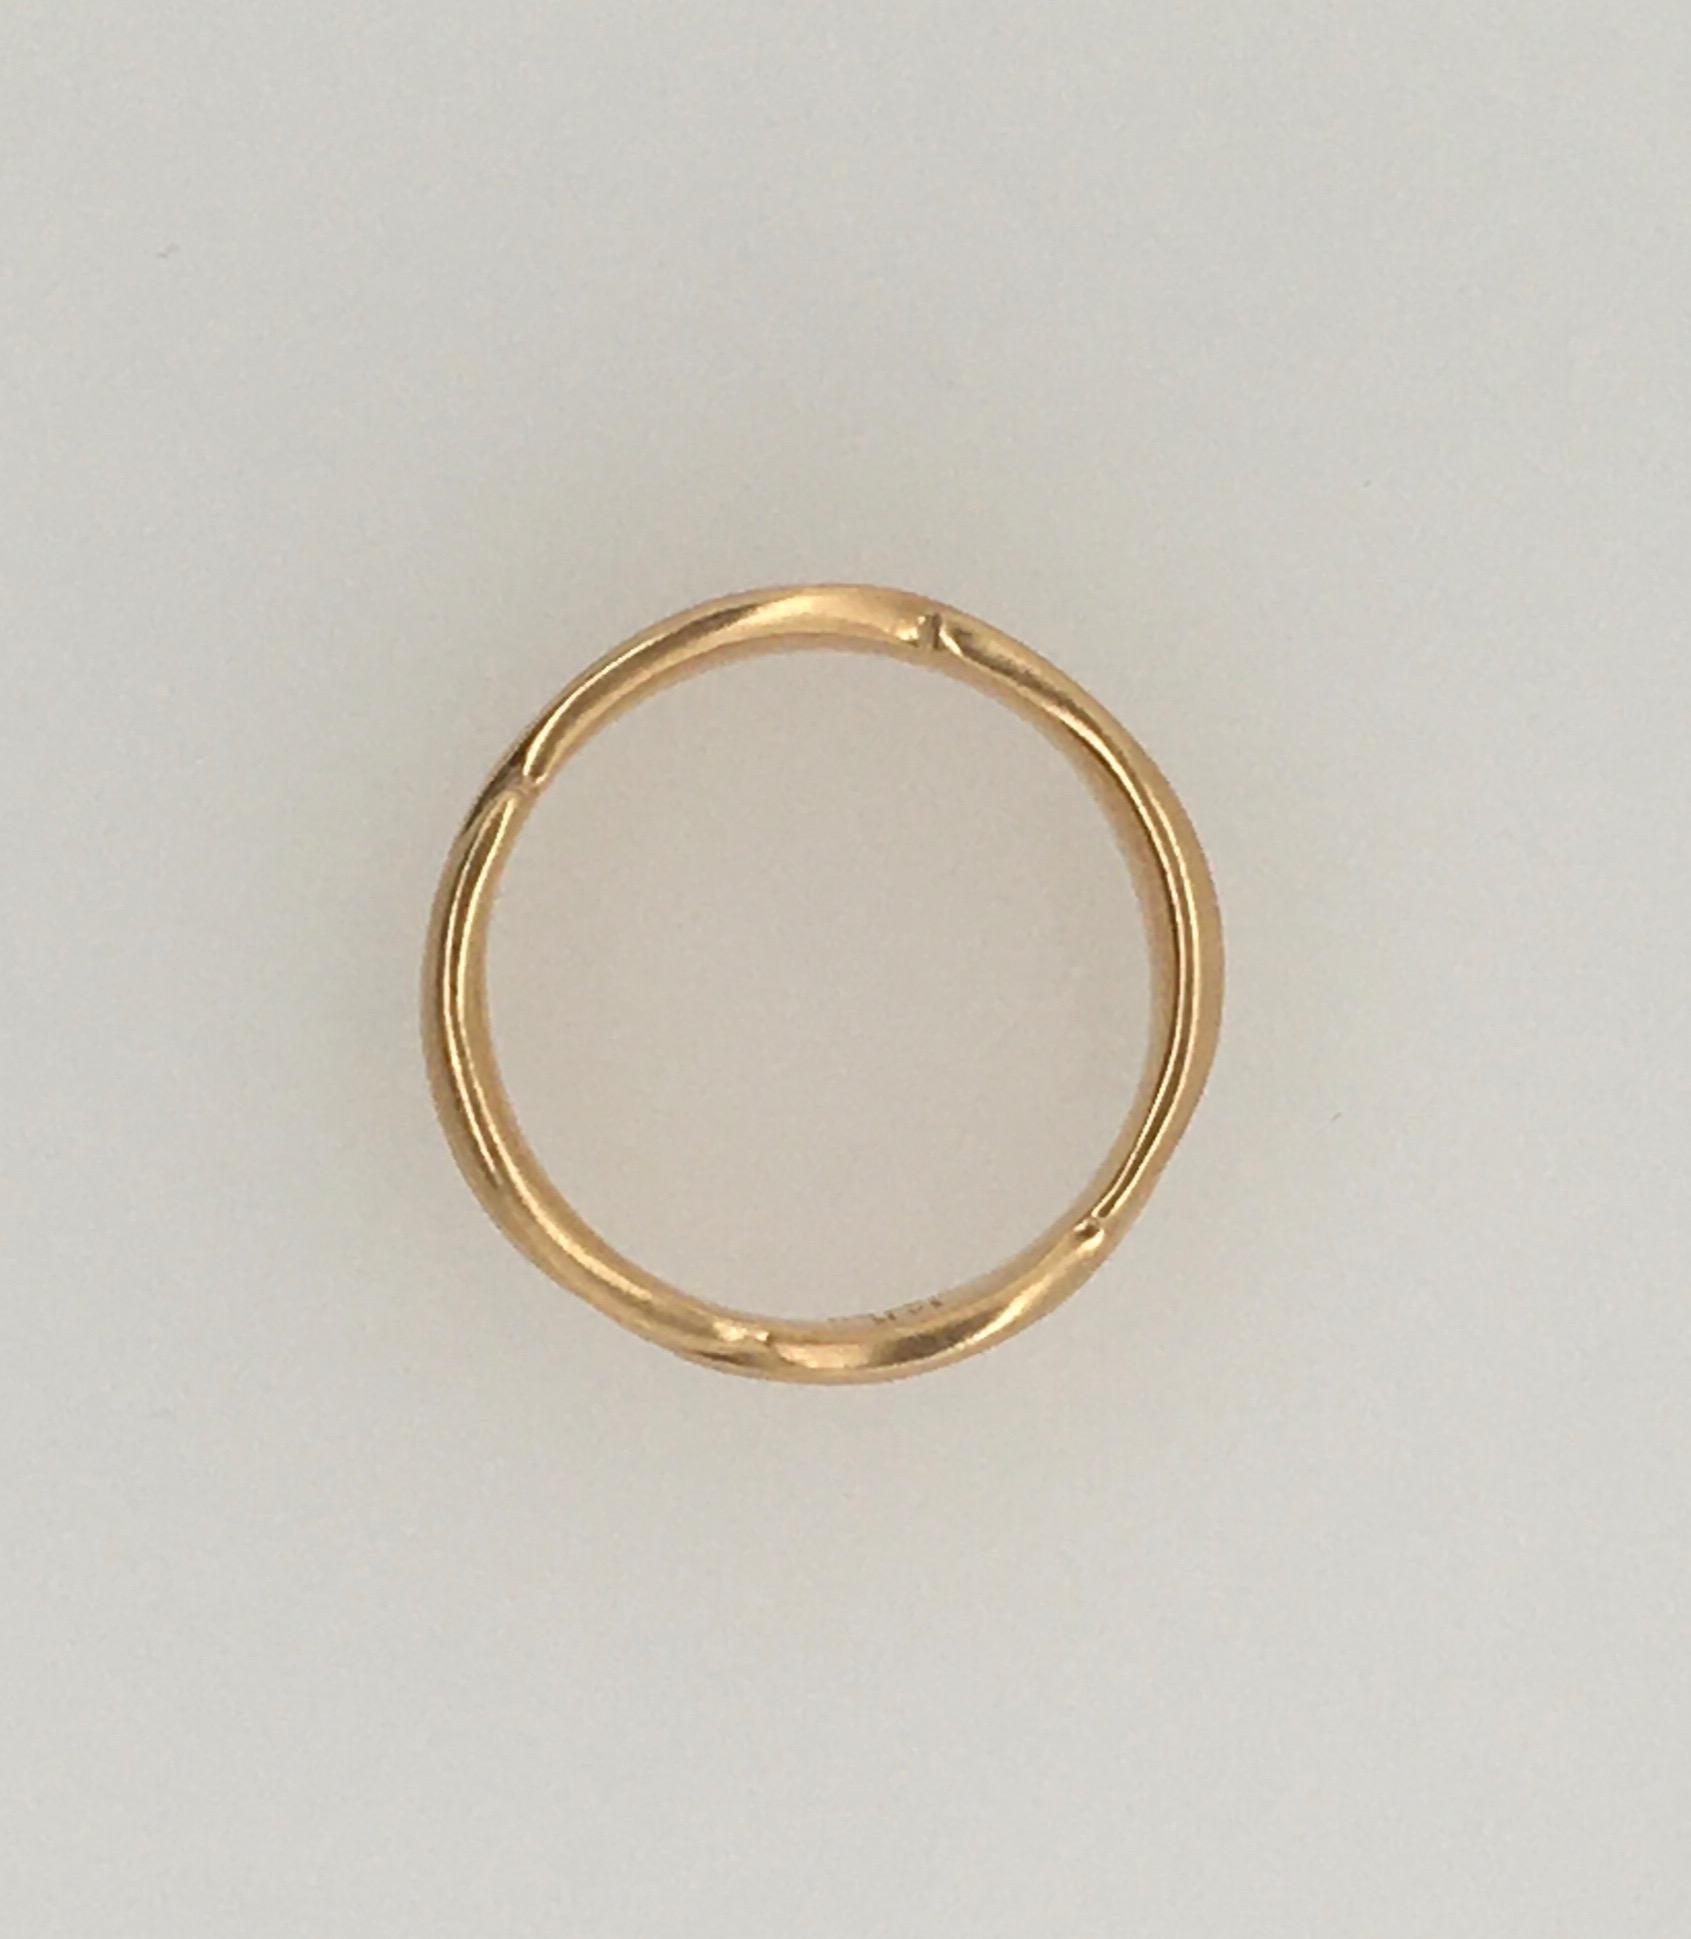 JENNIFER SHIGETOMI Stylized Gold Leaf & Vine Satin Finish Guinevere Ring For Sale 2